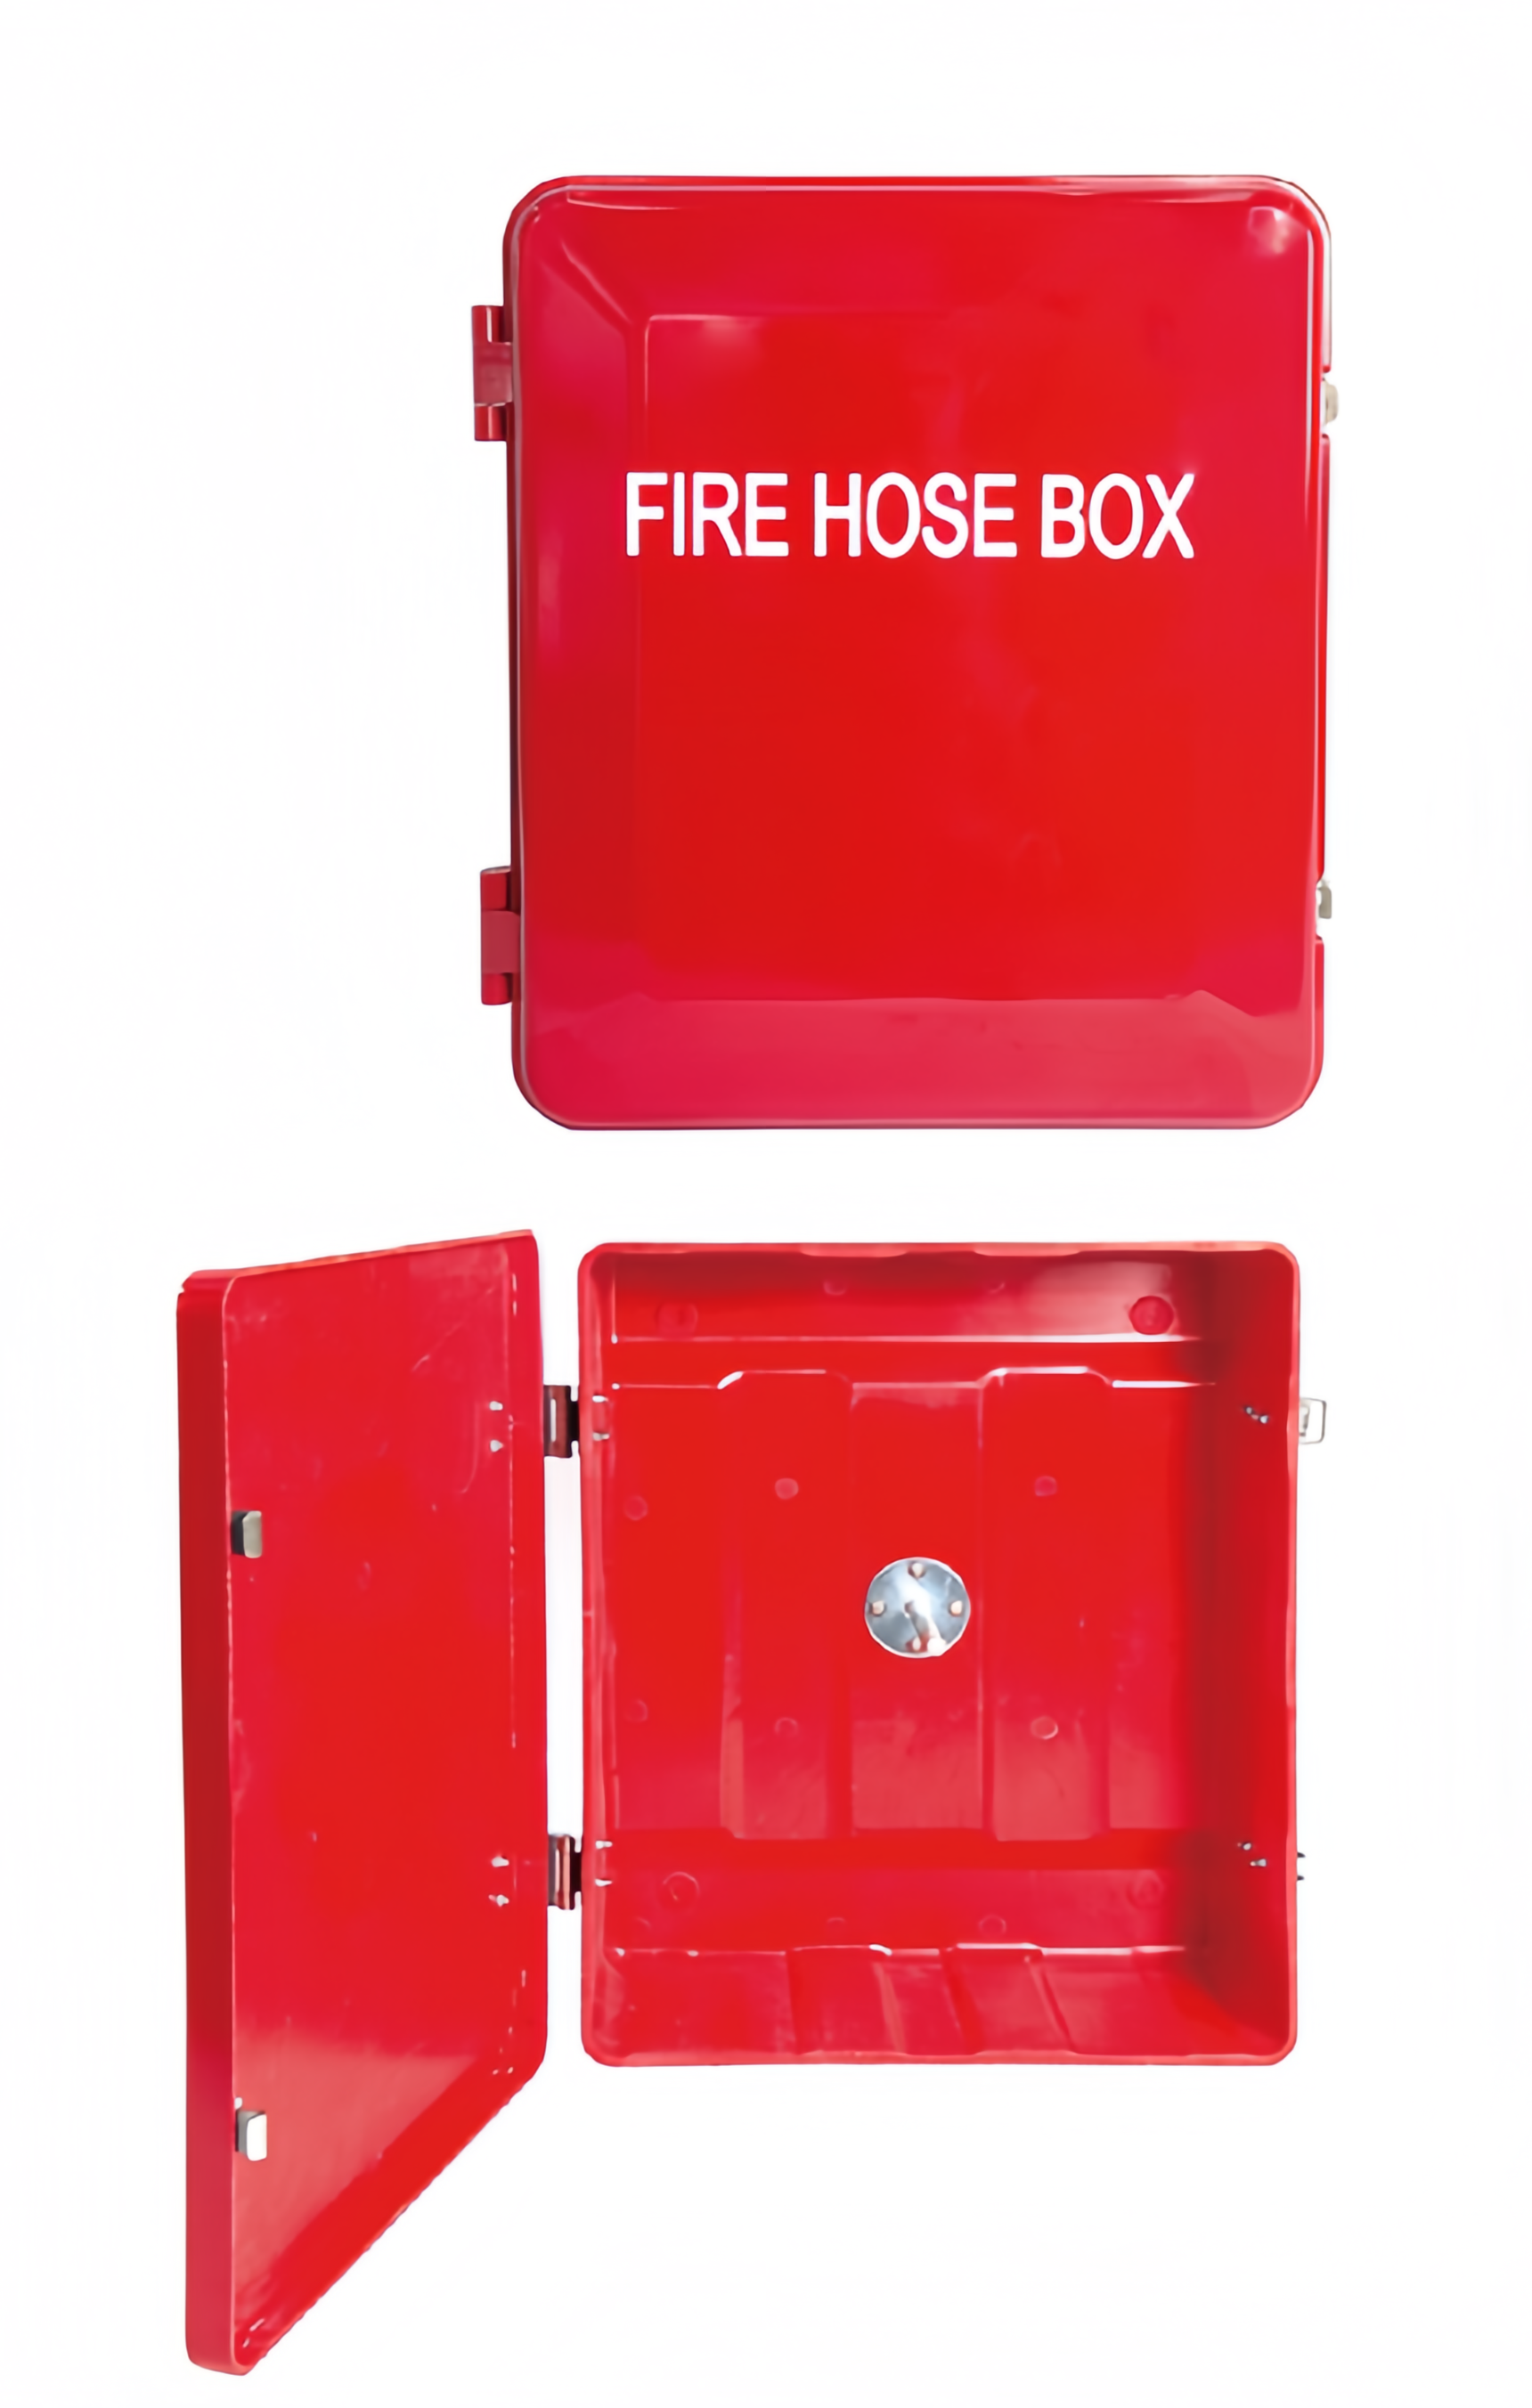 Marine Fire Hose Box Manufacturer